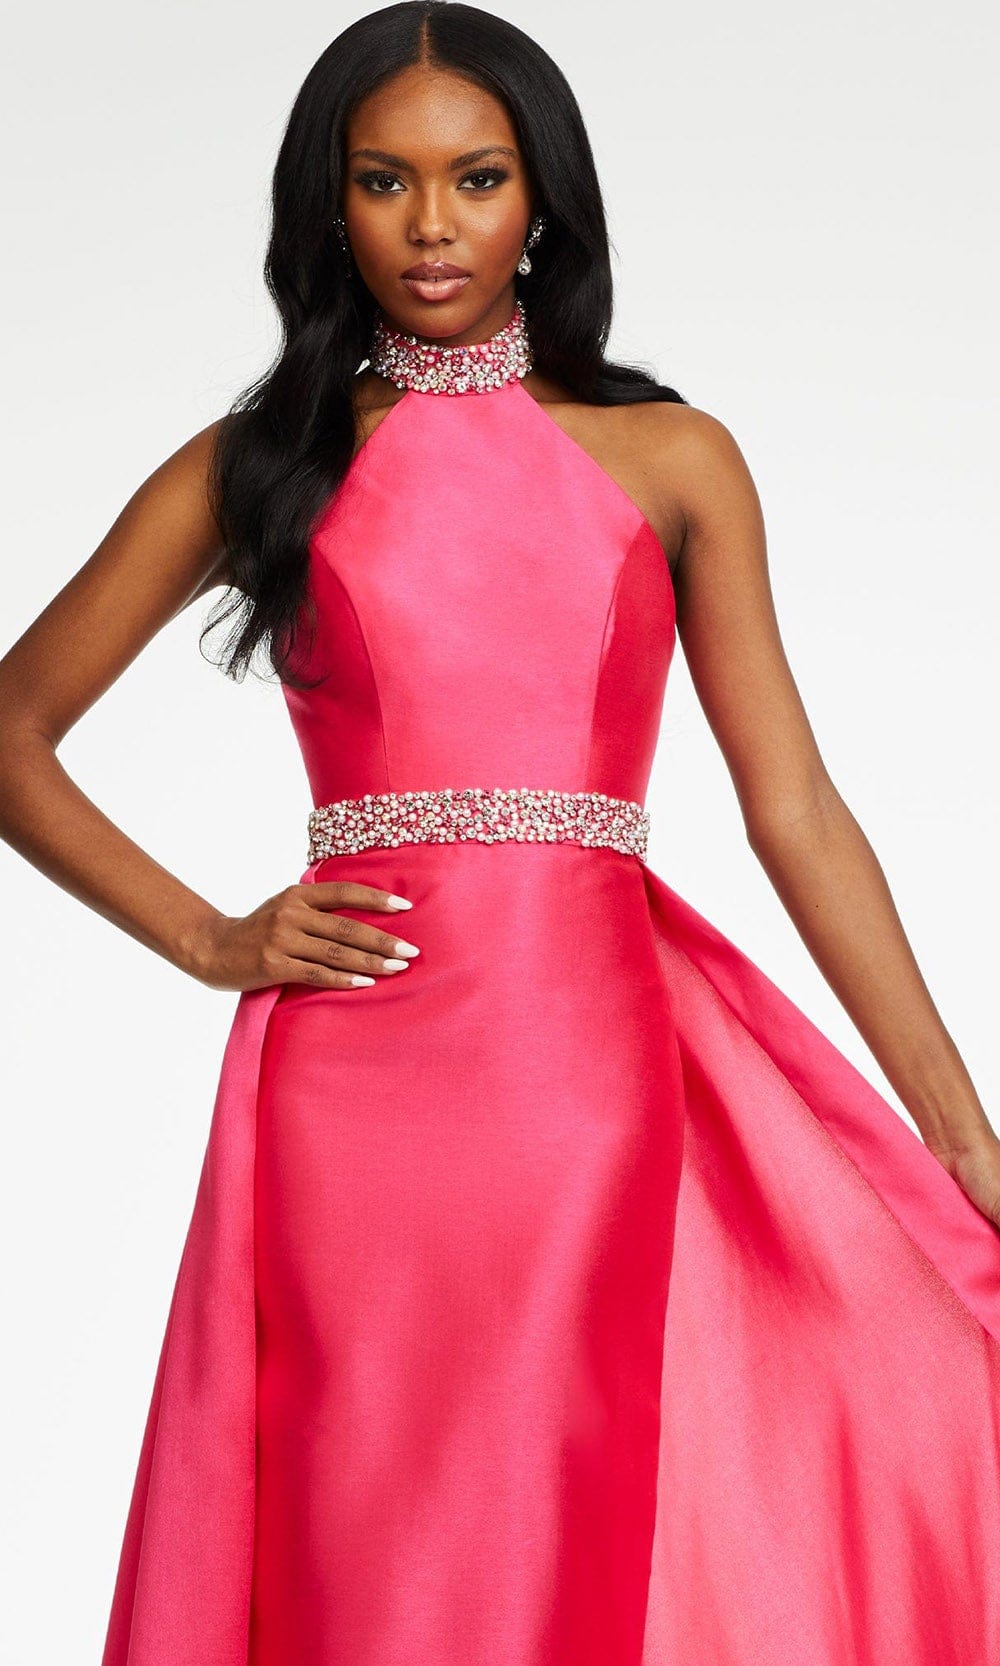 Ashley Lauren - 11148 Bejeweled High Halter Gown Prom Dresses